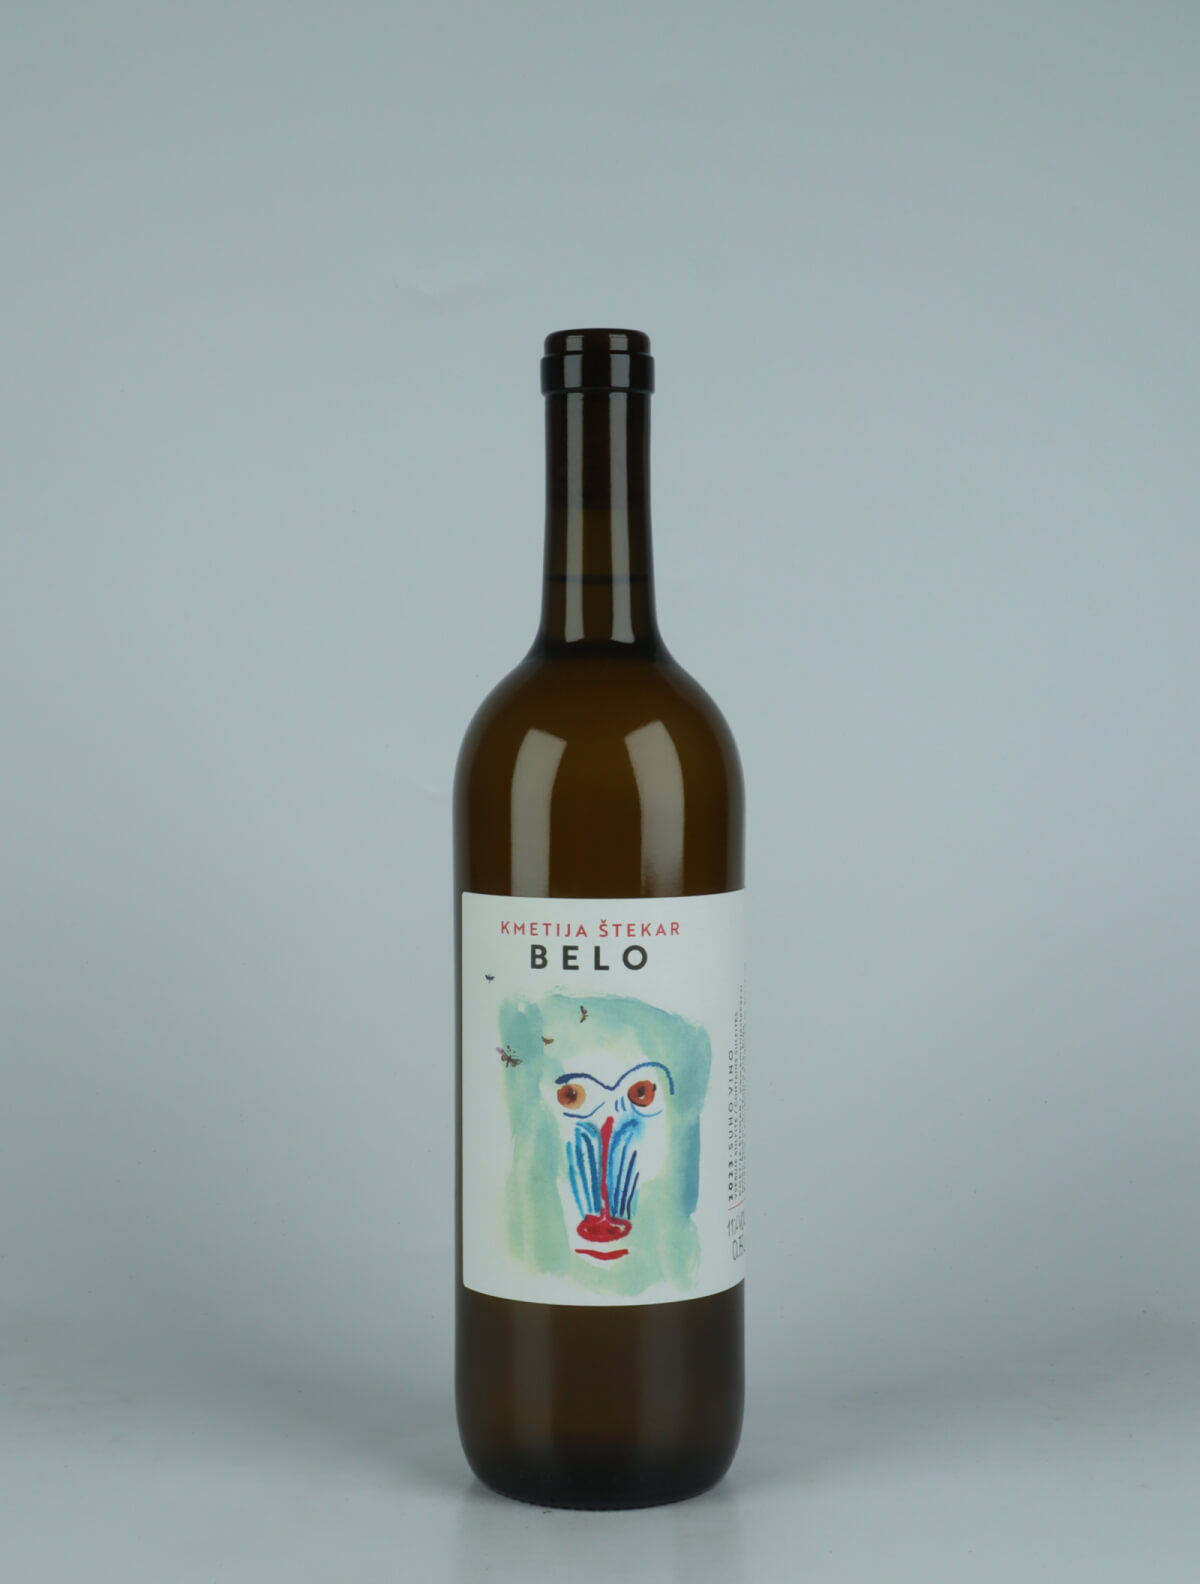 A bottle 2023 Belo White wine from Kmetija Stekar, Brda in Slovenia